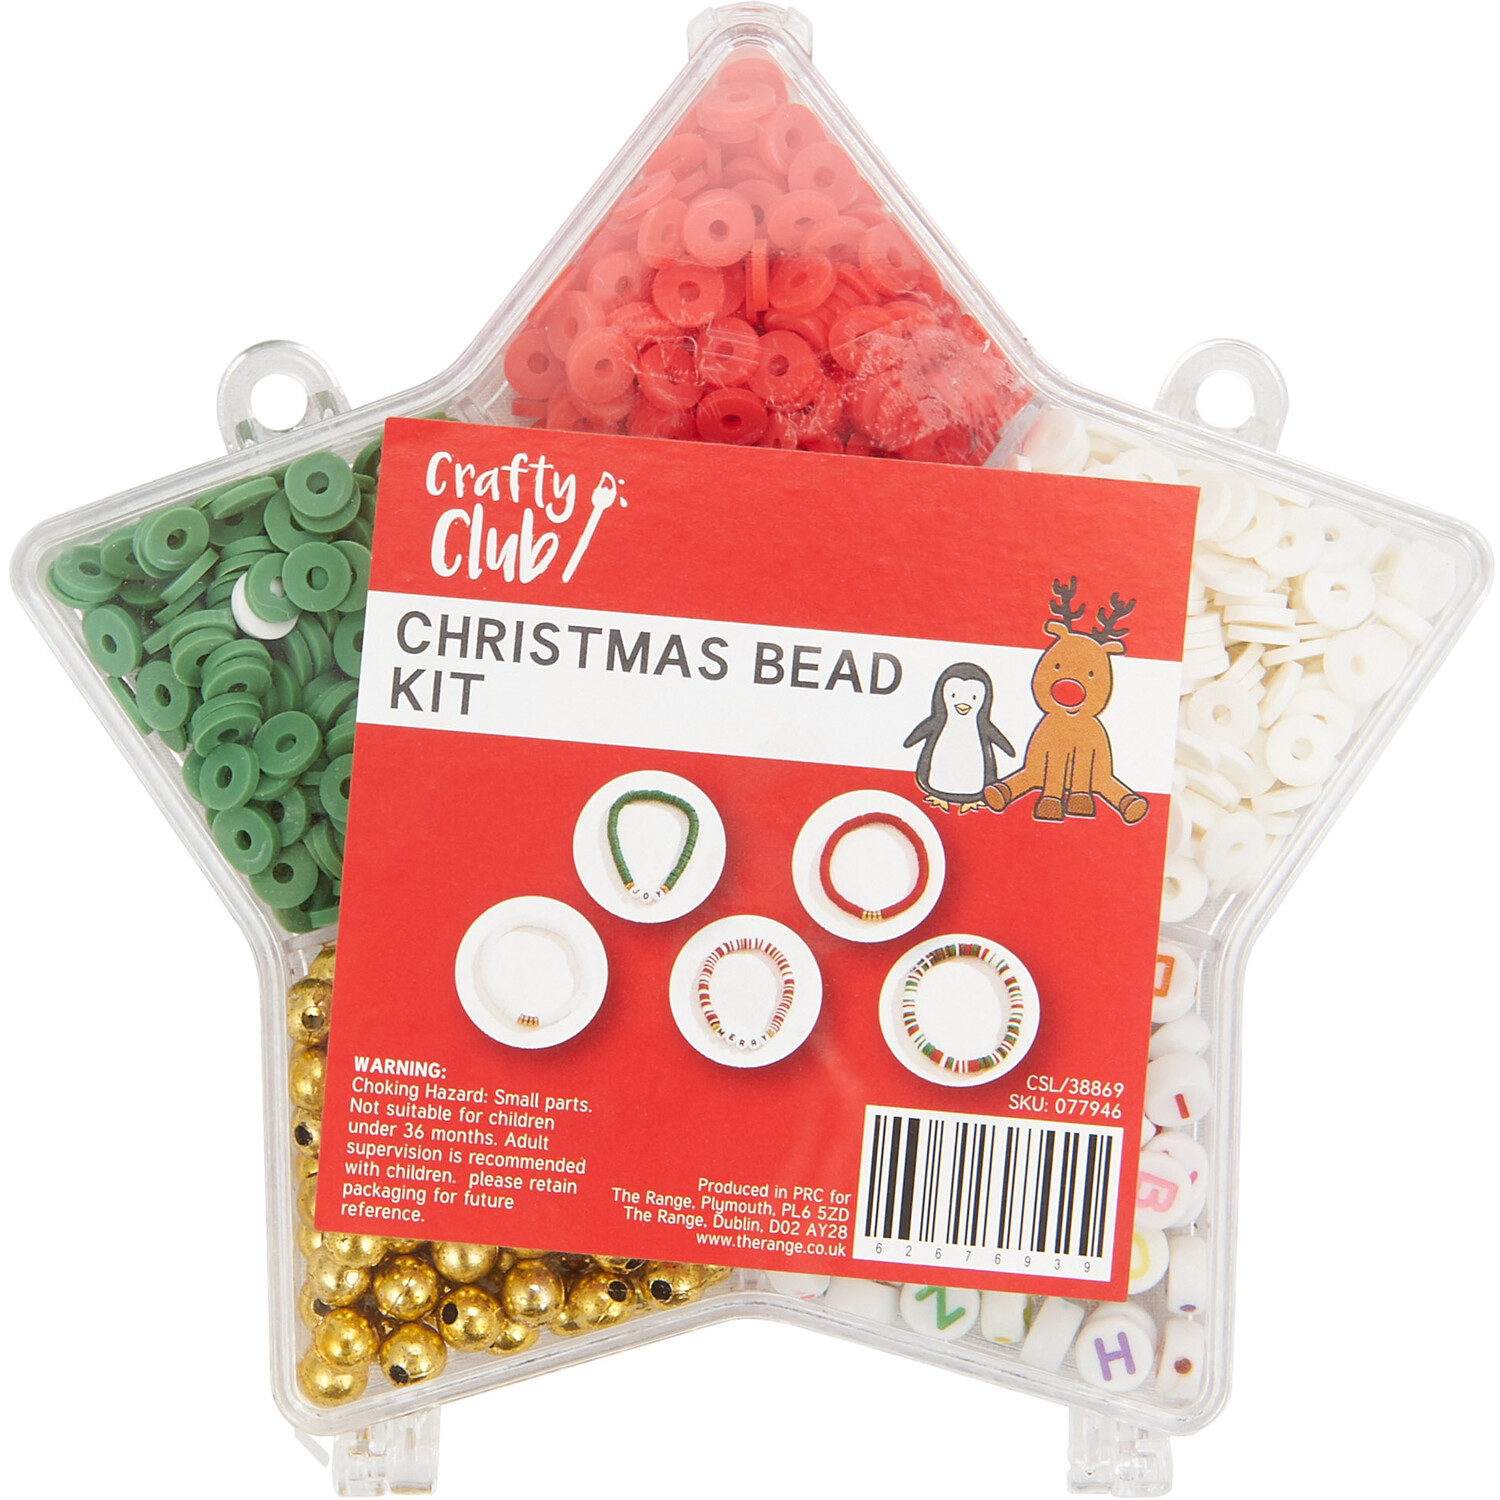 Crafty Club Christmas Bead Kit Image 1